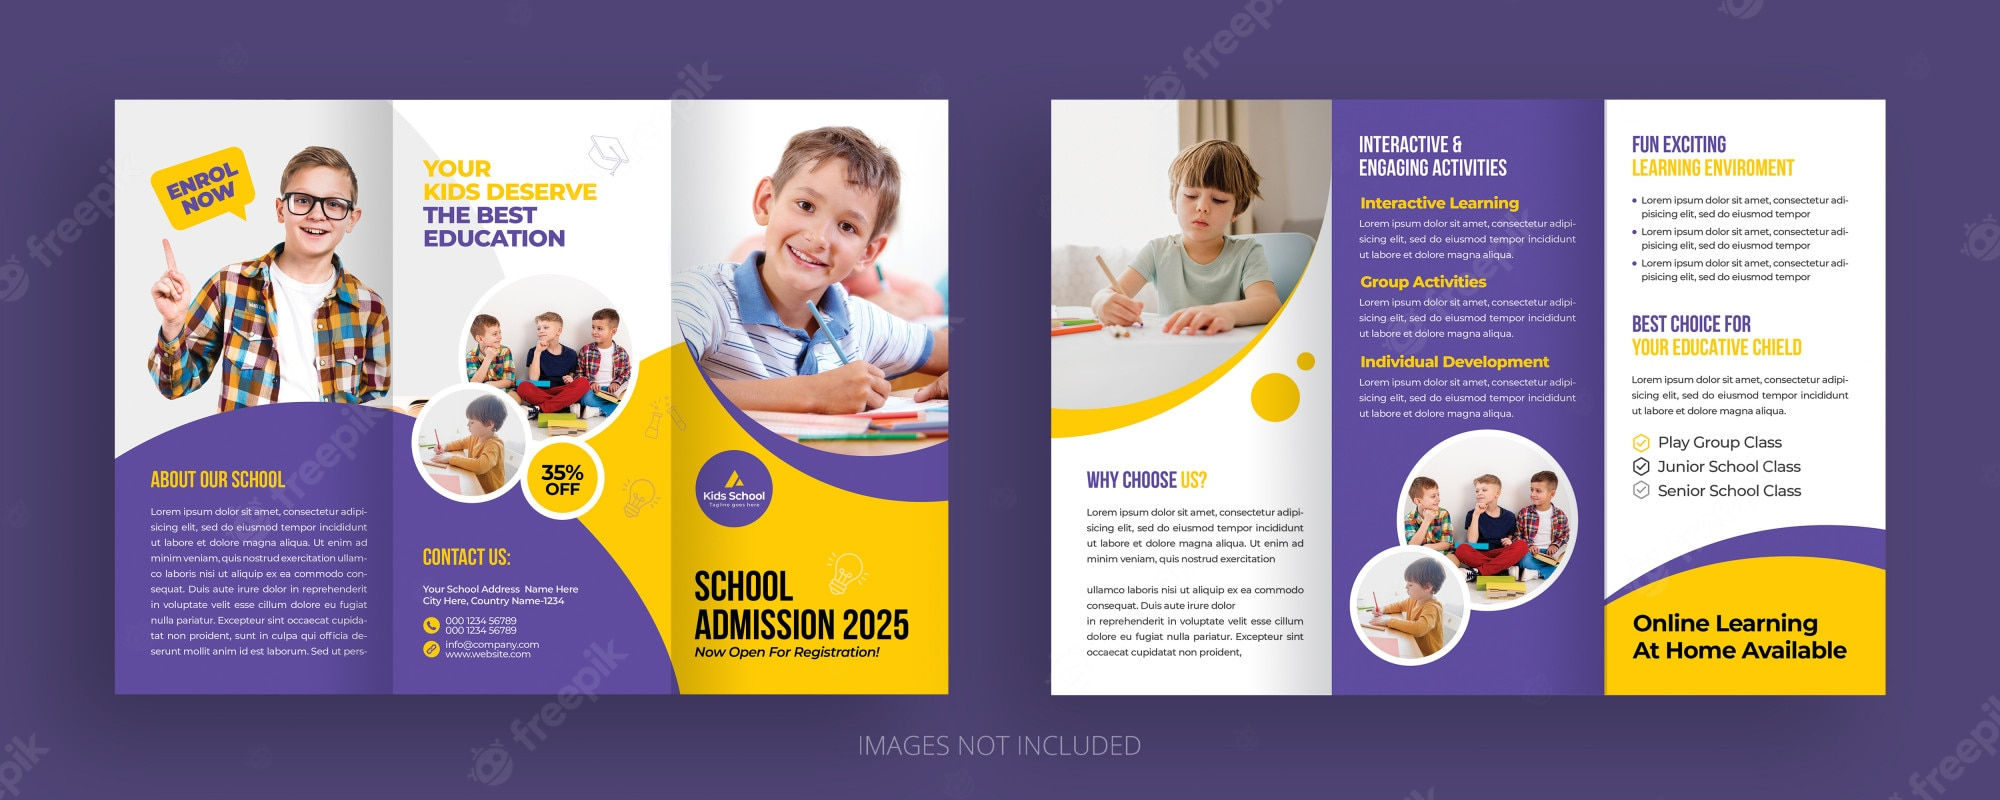 Education brochure Images  Free Vectors, Stock Photos & PSD Throughout School Brochure Design Templates